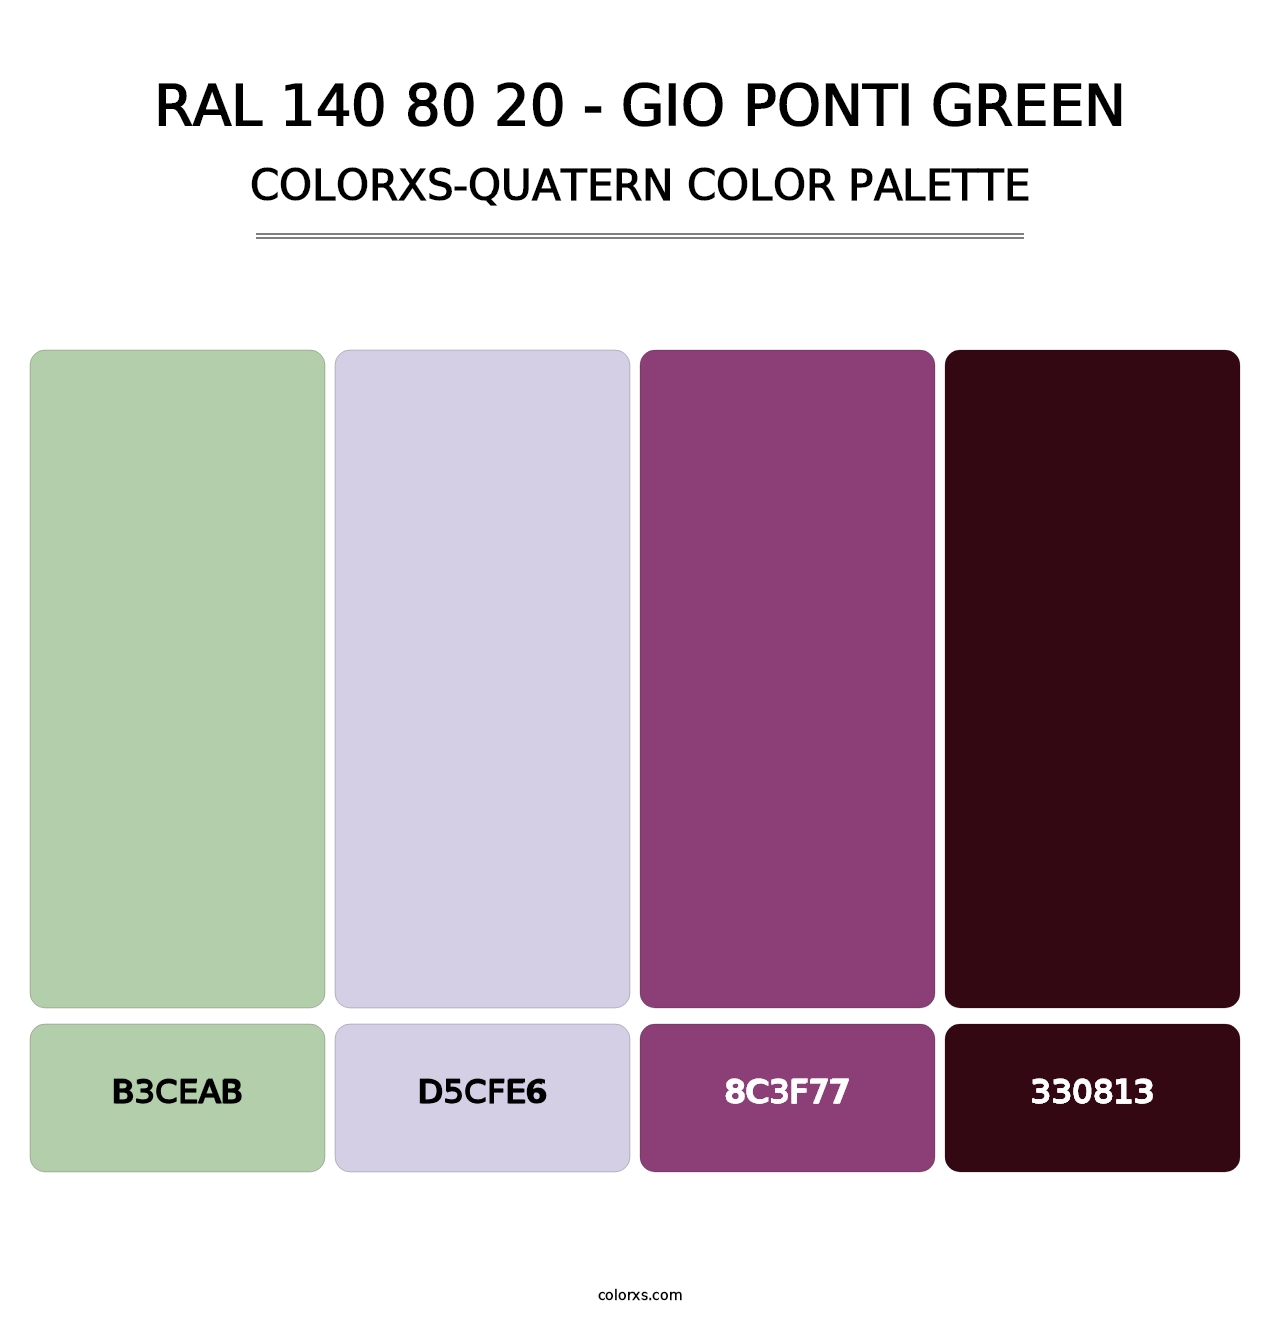 RAL 140 80 20 - Gio Ponti Green - Colorxs Quatern Palette